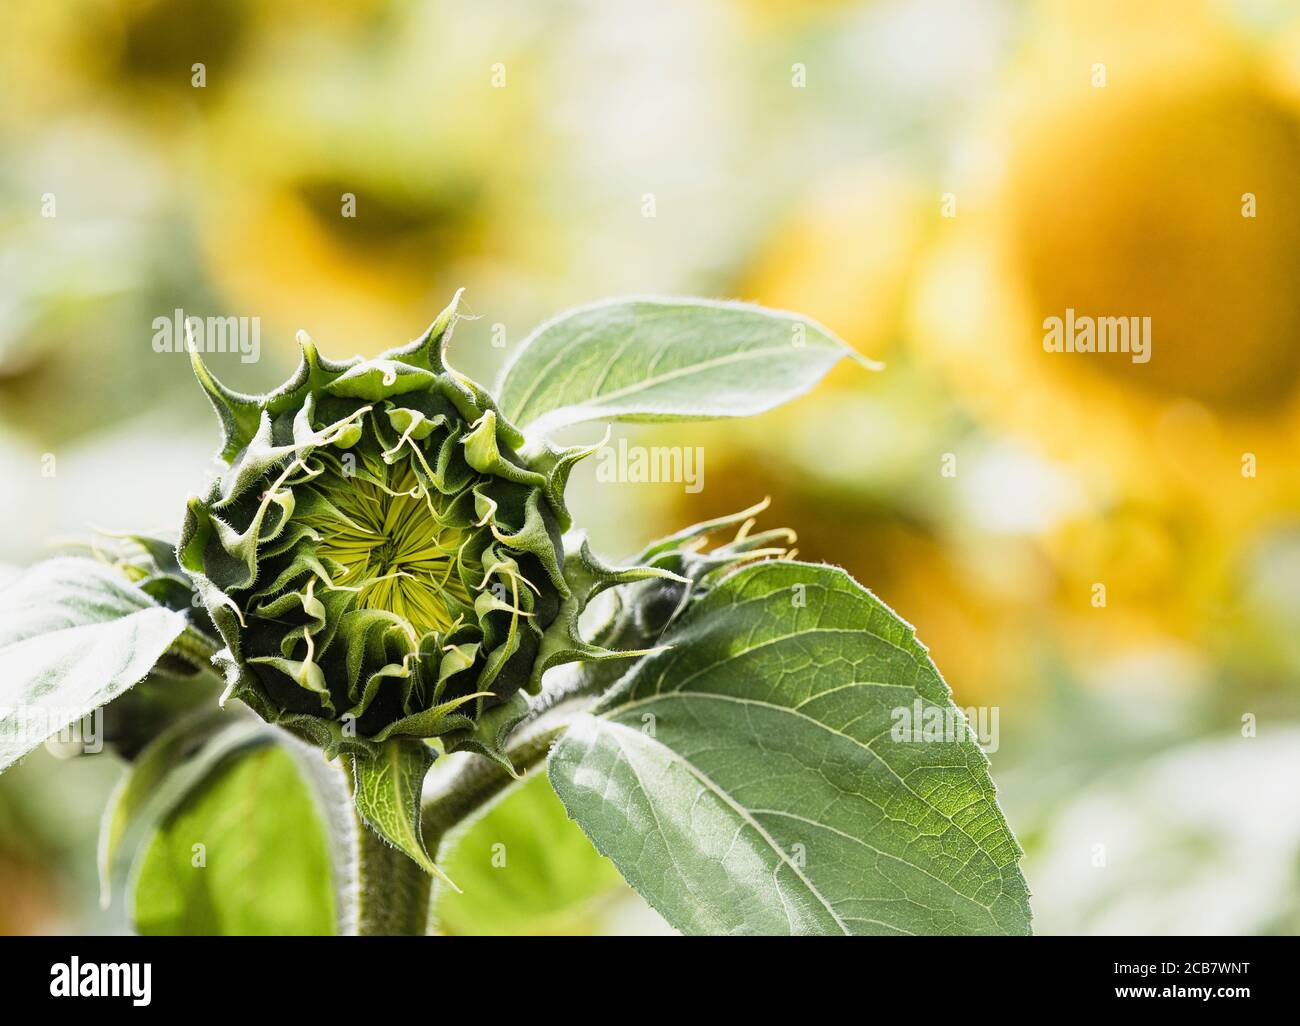 Sunflower, Helianthus, Unopened sunflowers heads growing outdoor. Stock Photo